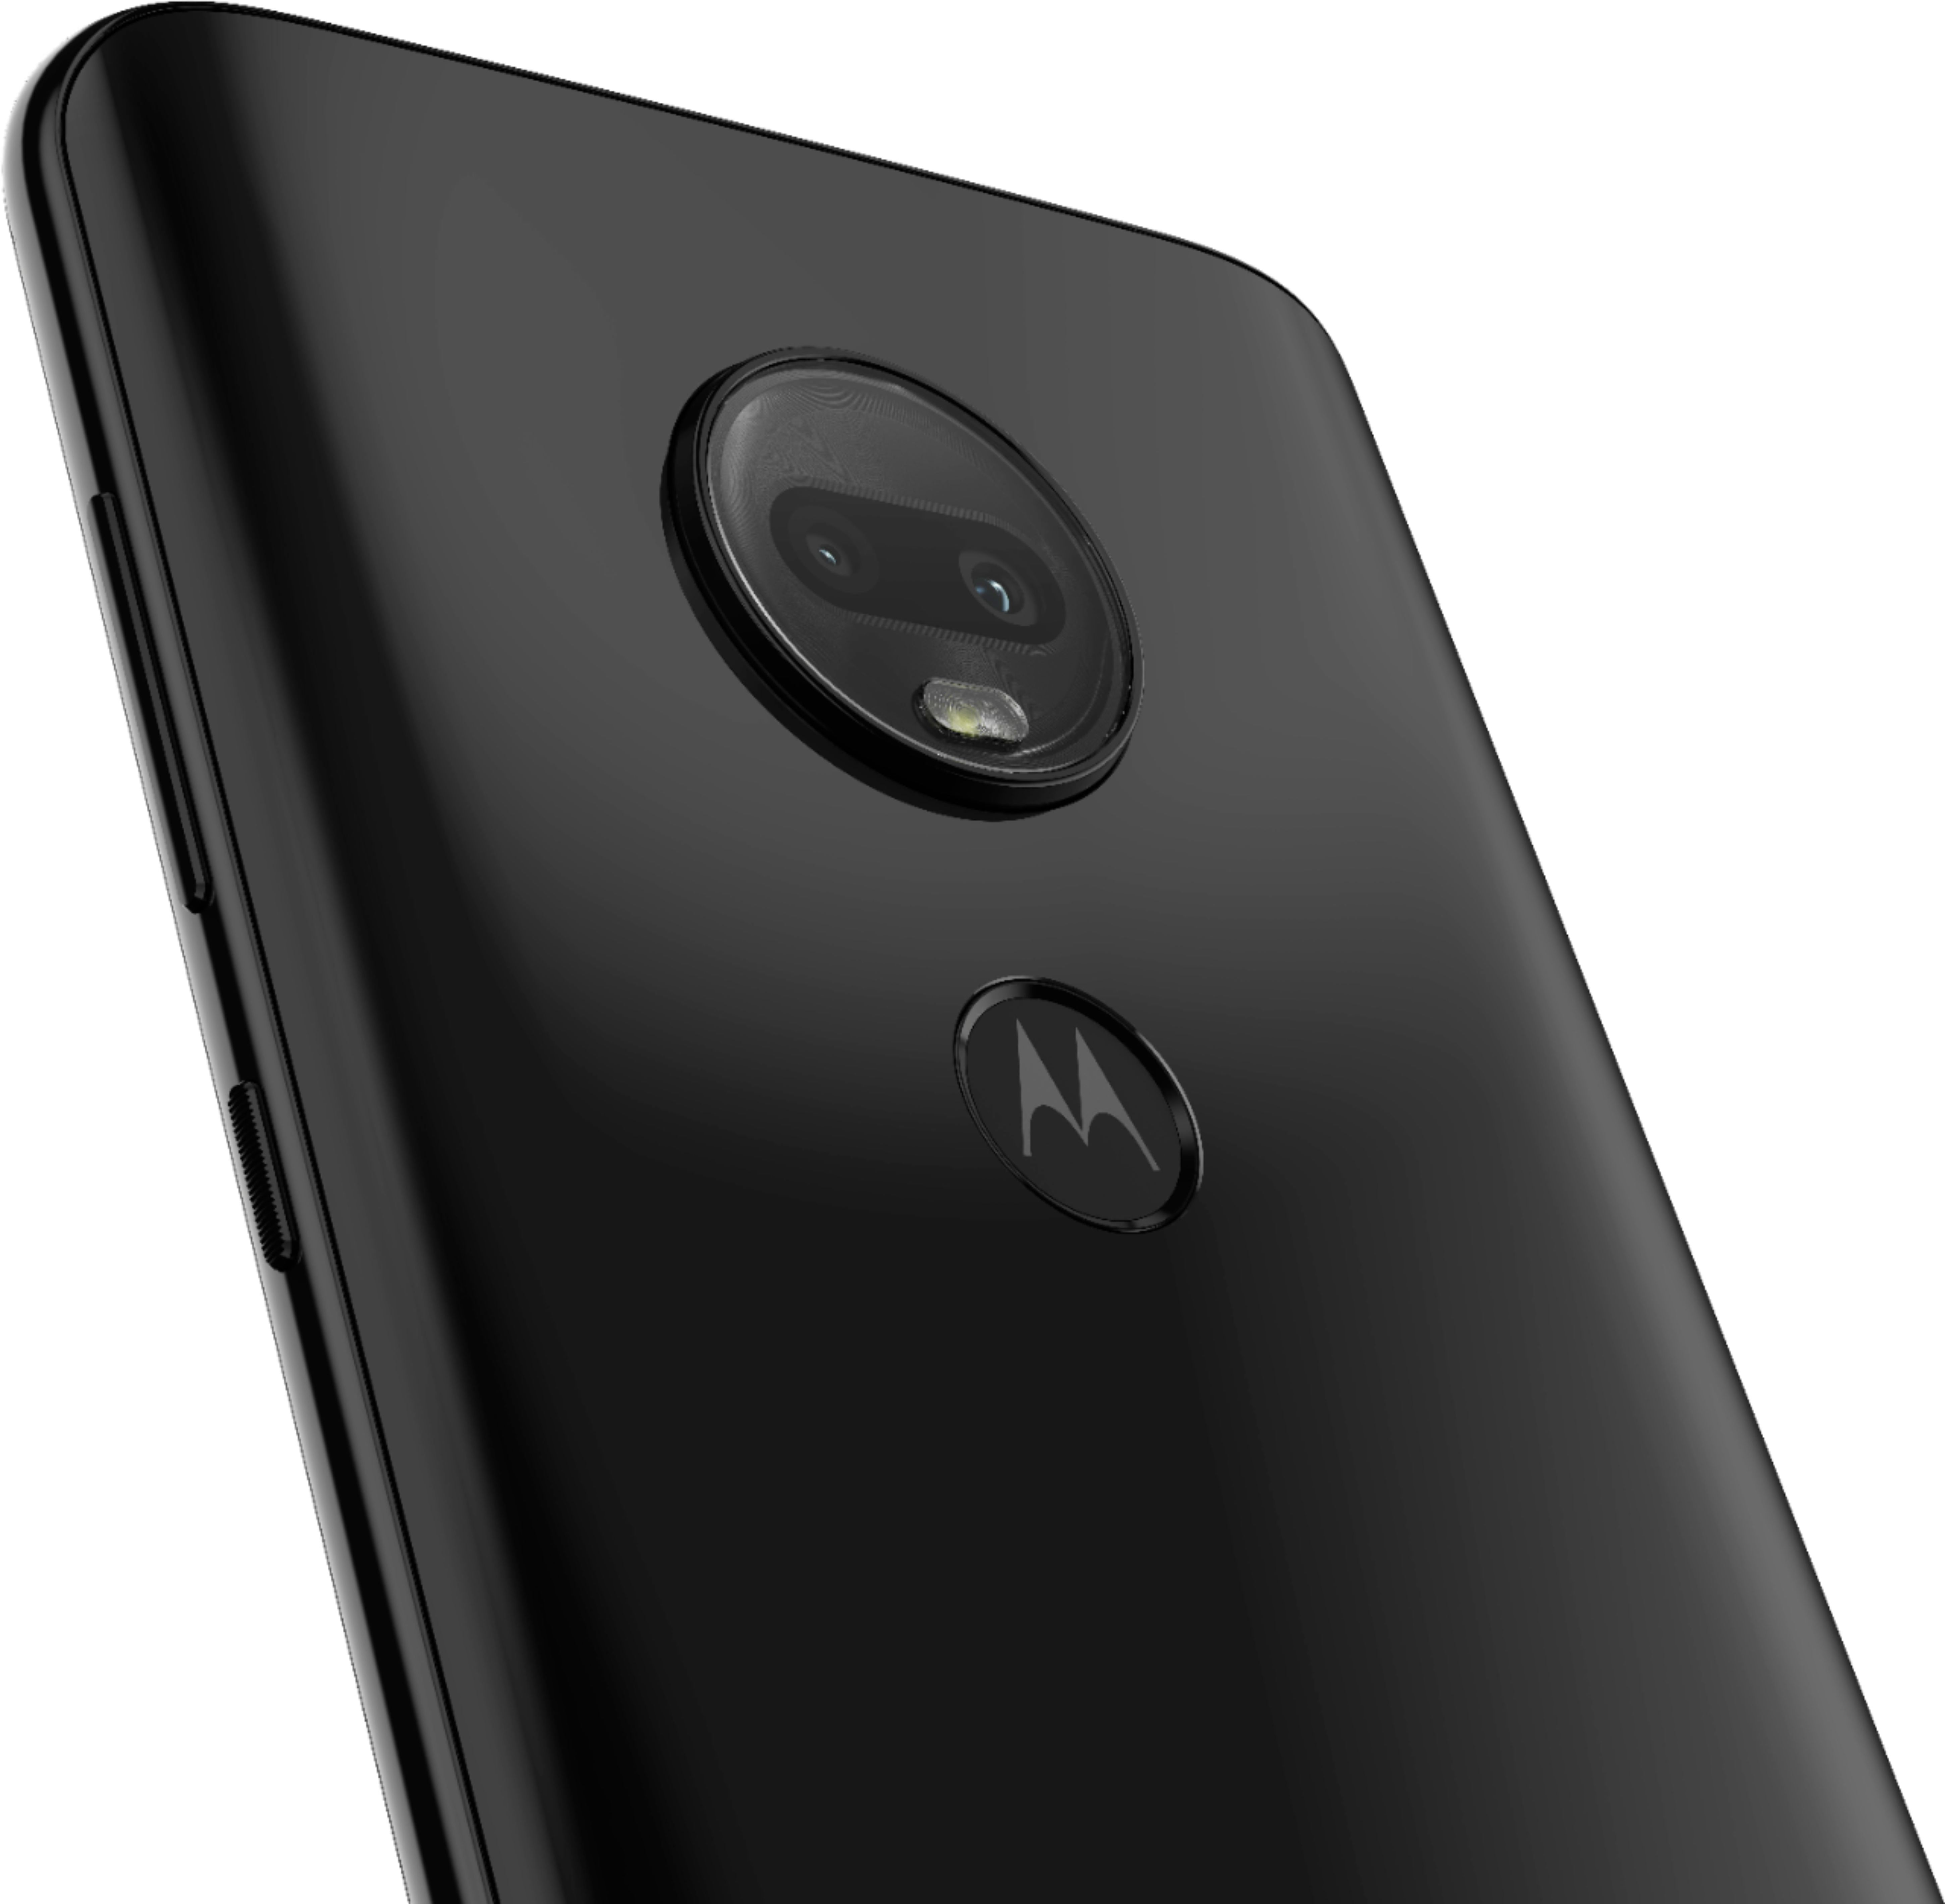 mot Canada Voetganger Best Buy: Motorola Moto G7 with 64GB Memory Cell Phone (Unlocked) Ceramic  Black PAE00002US